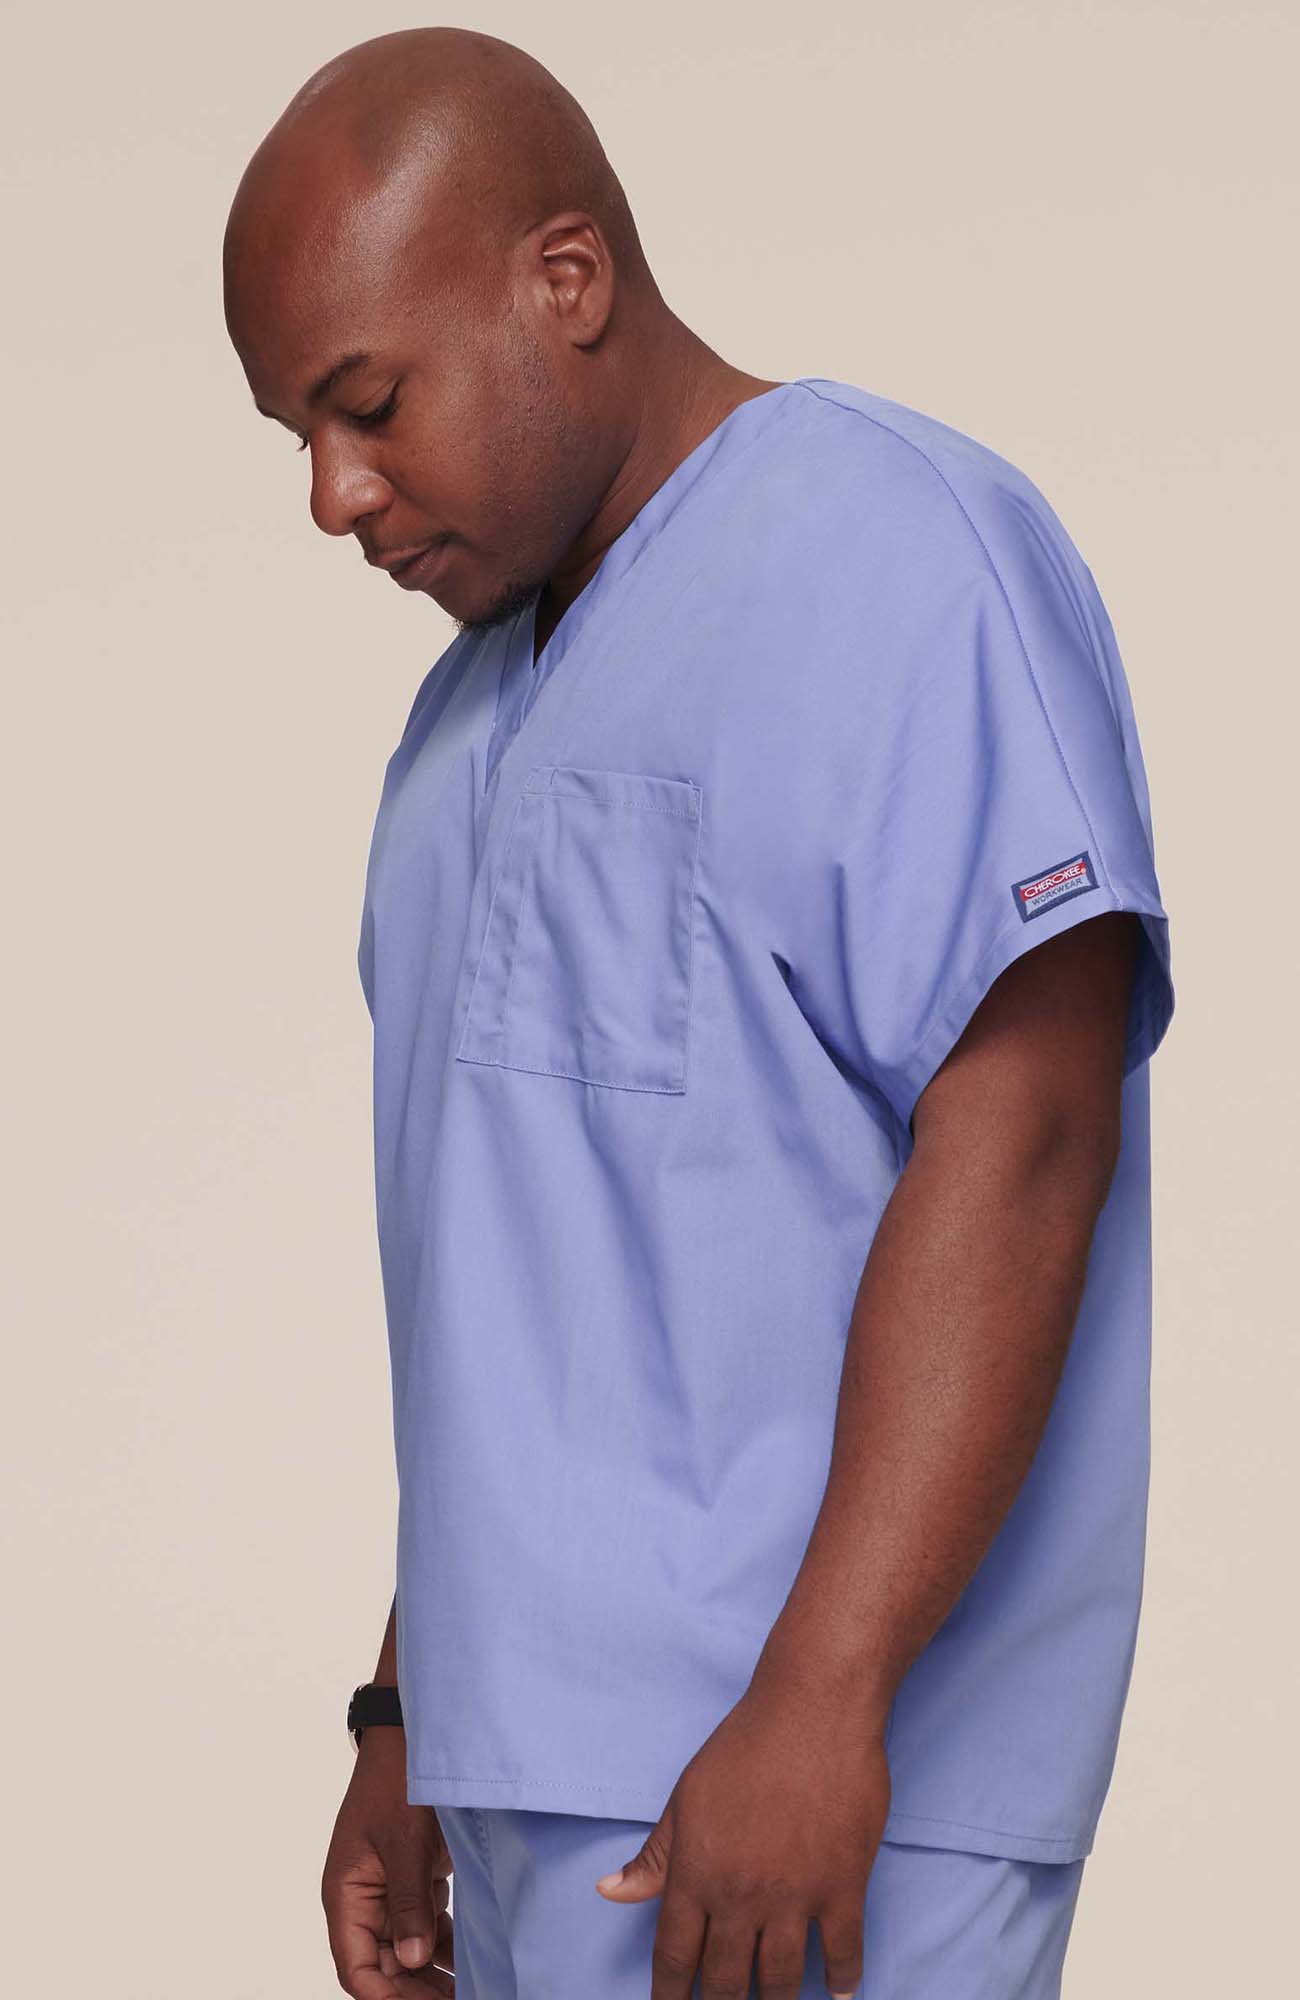 Two Lower Pockets Spectrum V Neck Unisex Medical Tunic Tops Uniform 3/4 Sleeve 